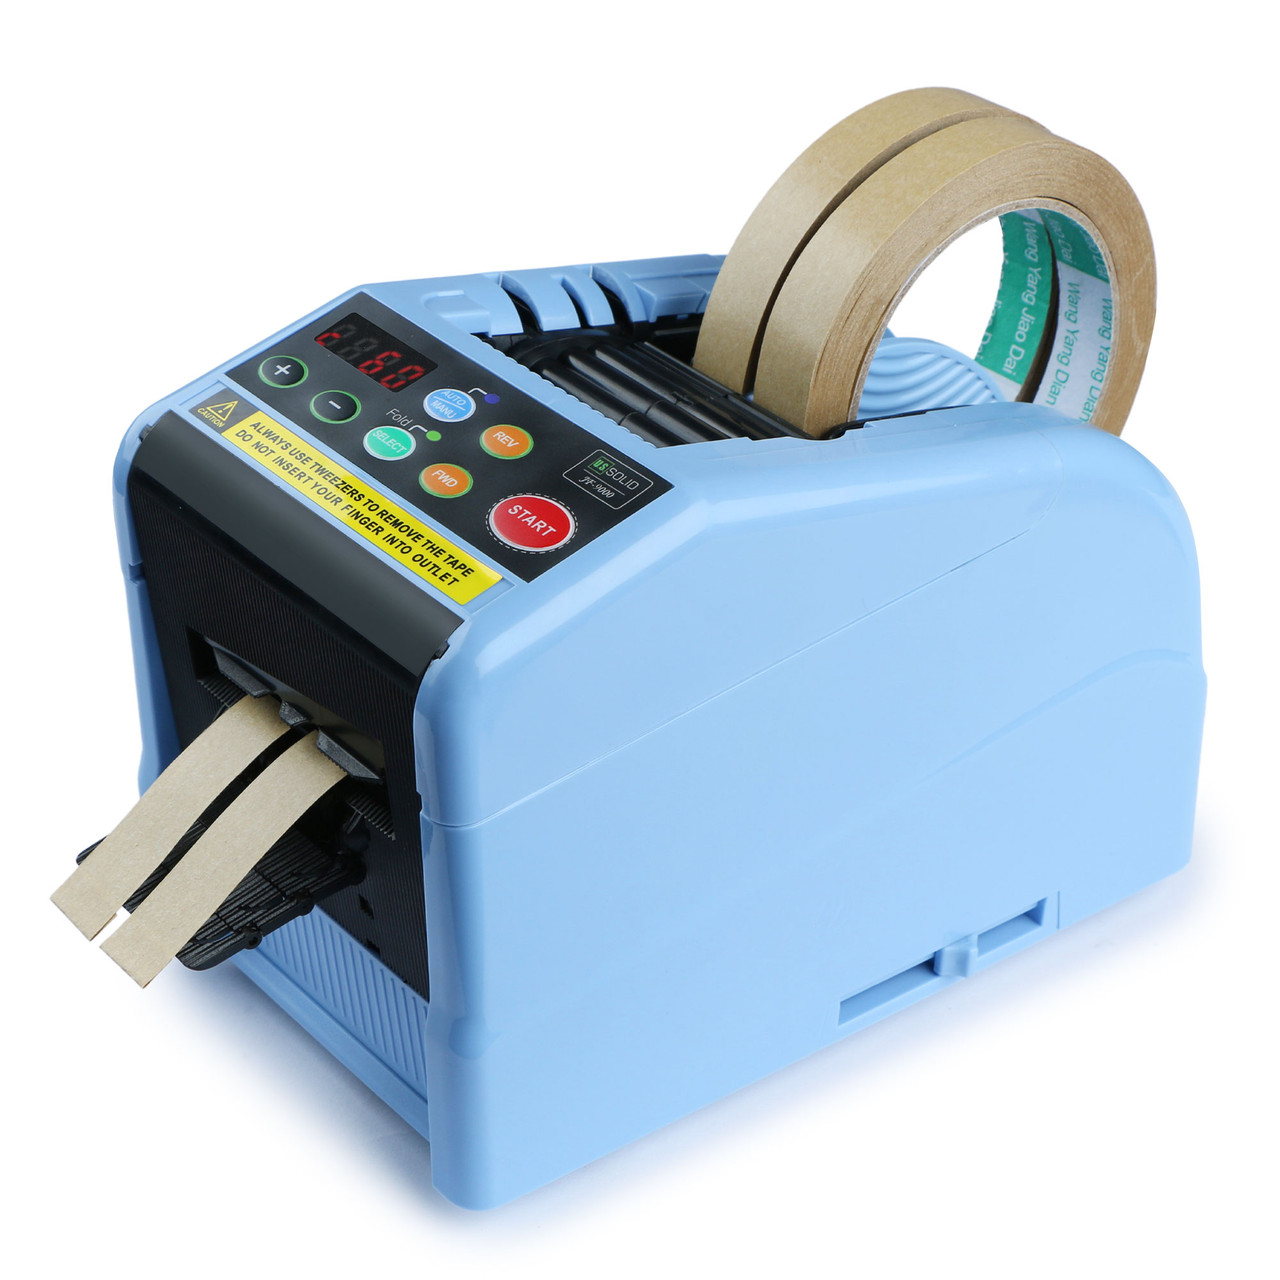  Tofficu Sealing Device Mailing Tape Cutter Tape